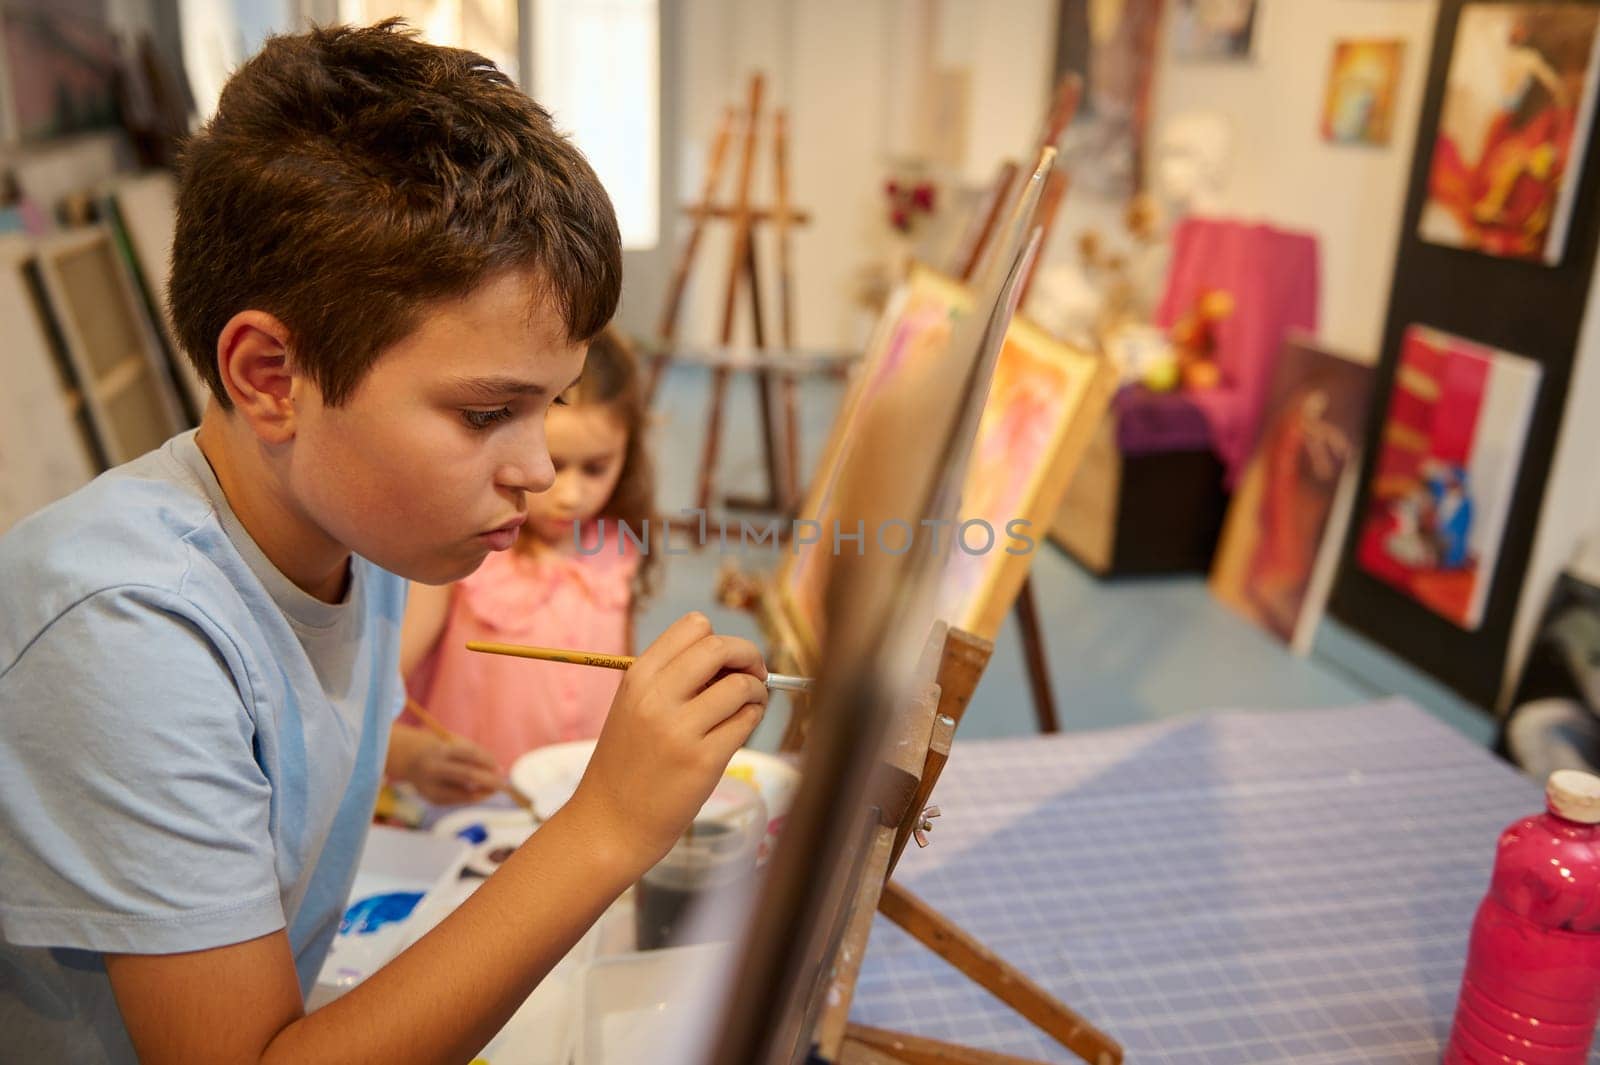 Caucasian handsome teenage school boy focused on painting on canvas in creative art workshop by artgf